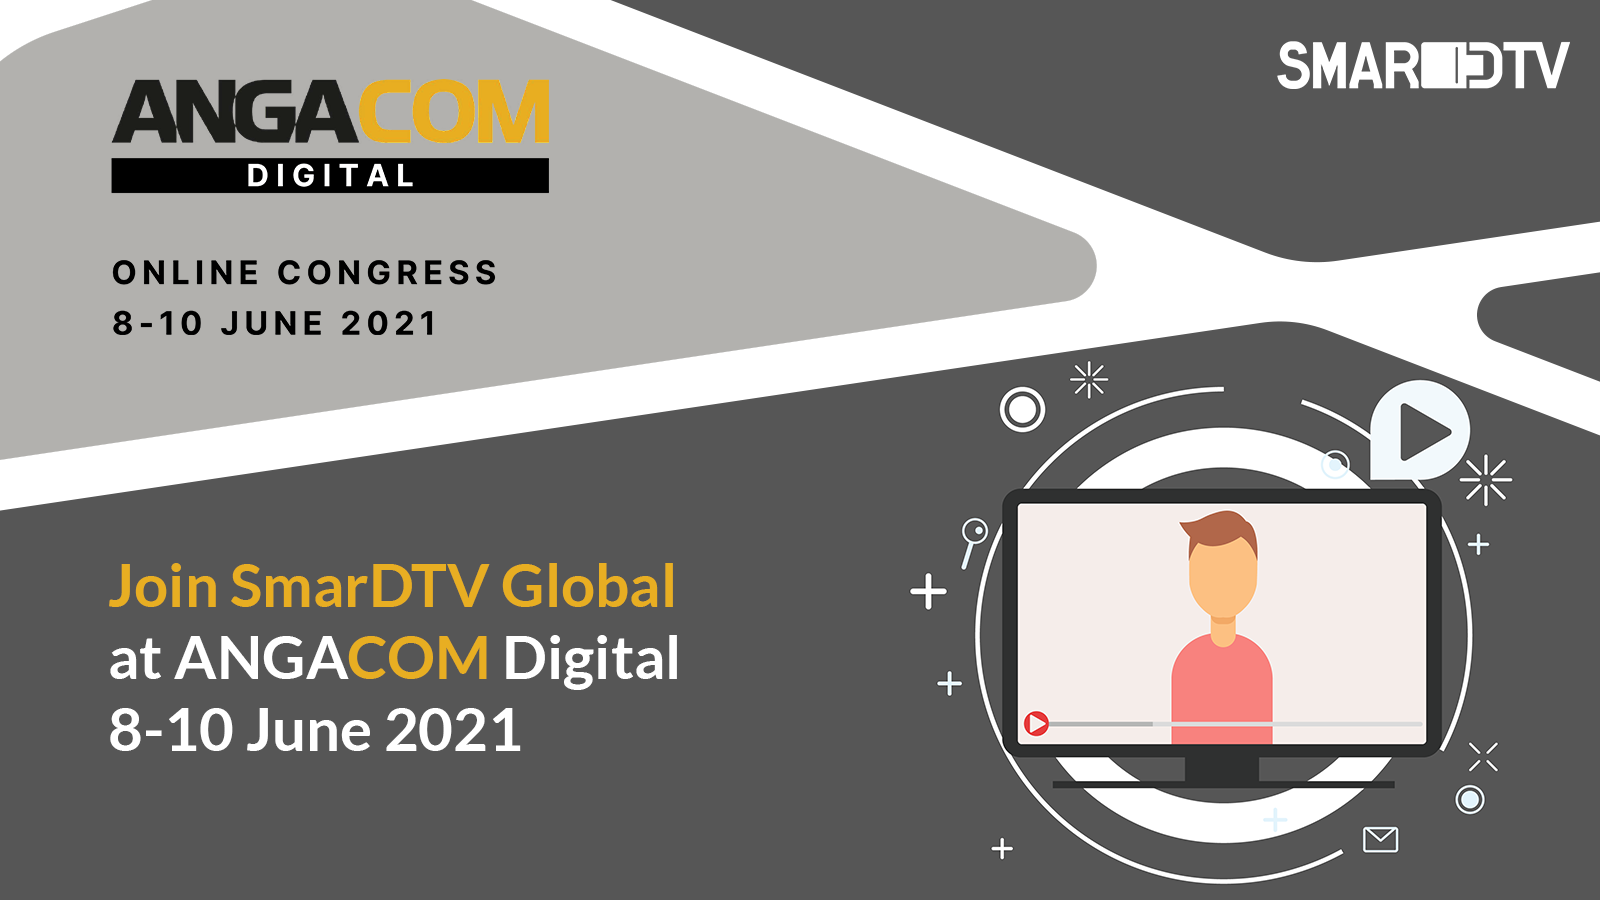 SmarDTV Global ANGA COM Digital 2021